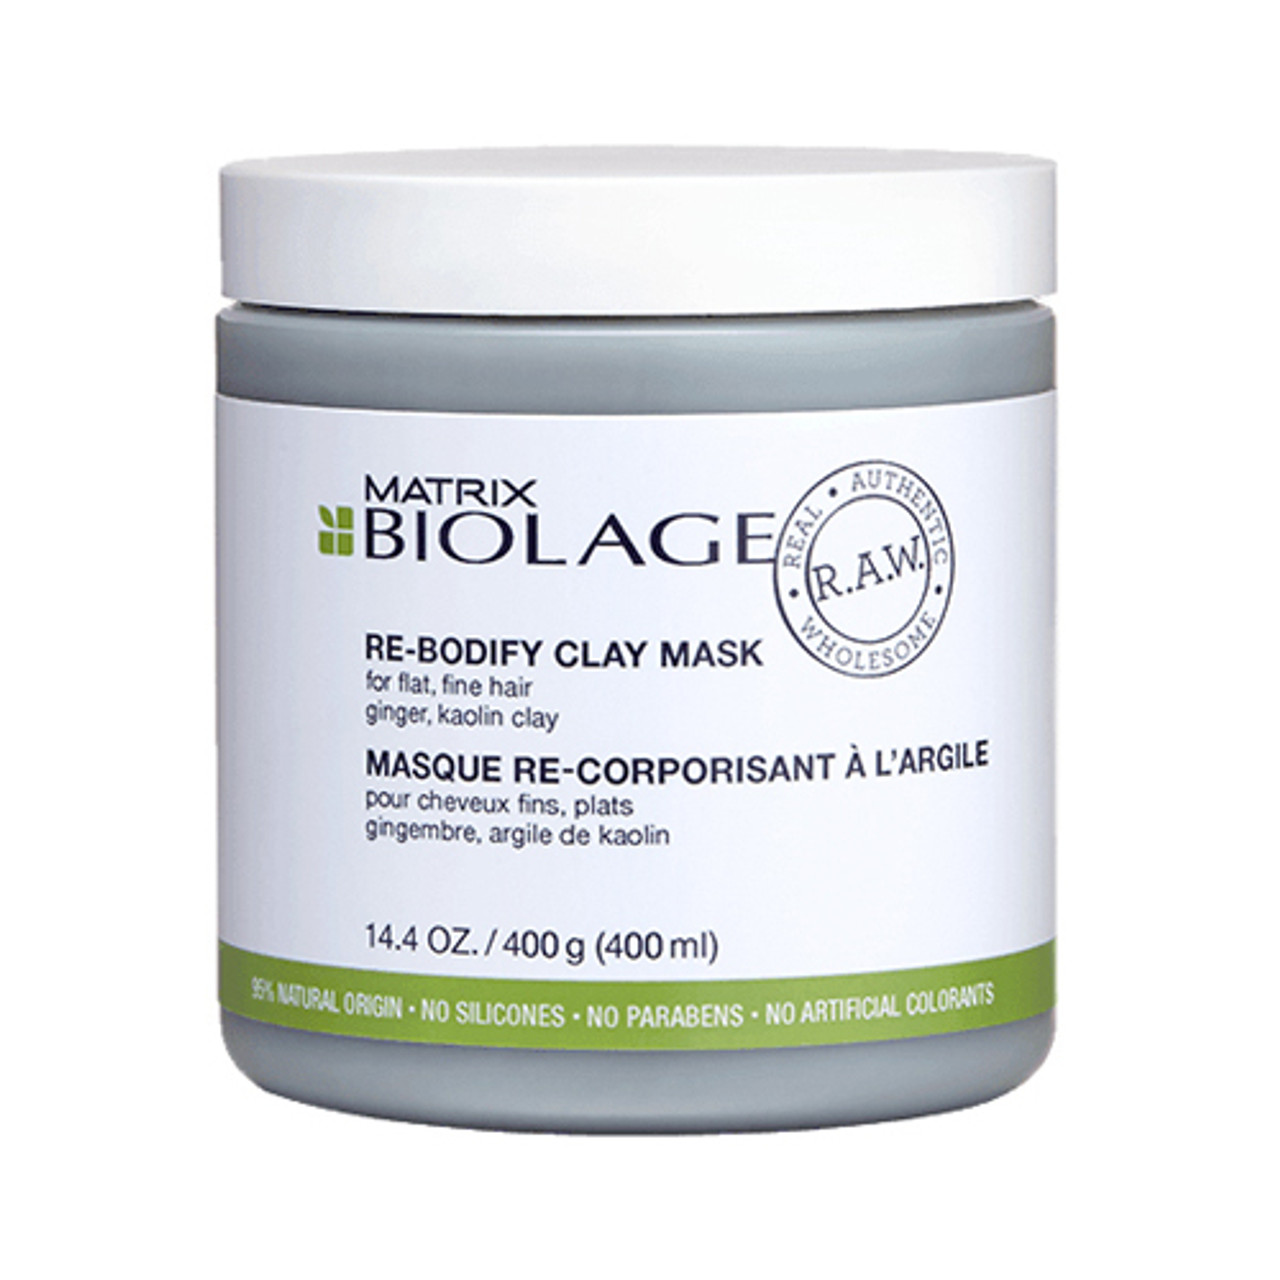 Matrix Biolage R.A.W. Re-Bodifying Clay Mask 14.4 oz|Glamazon Beauty Supply